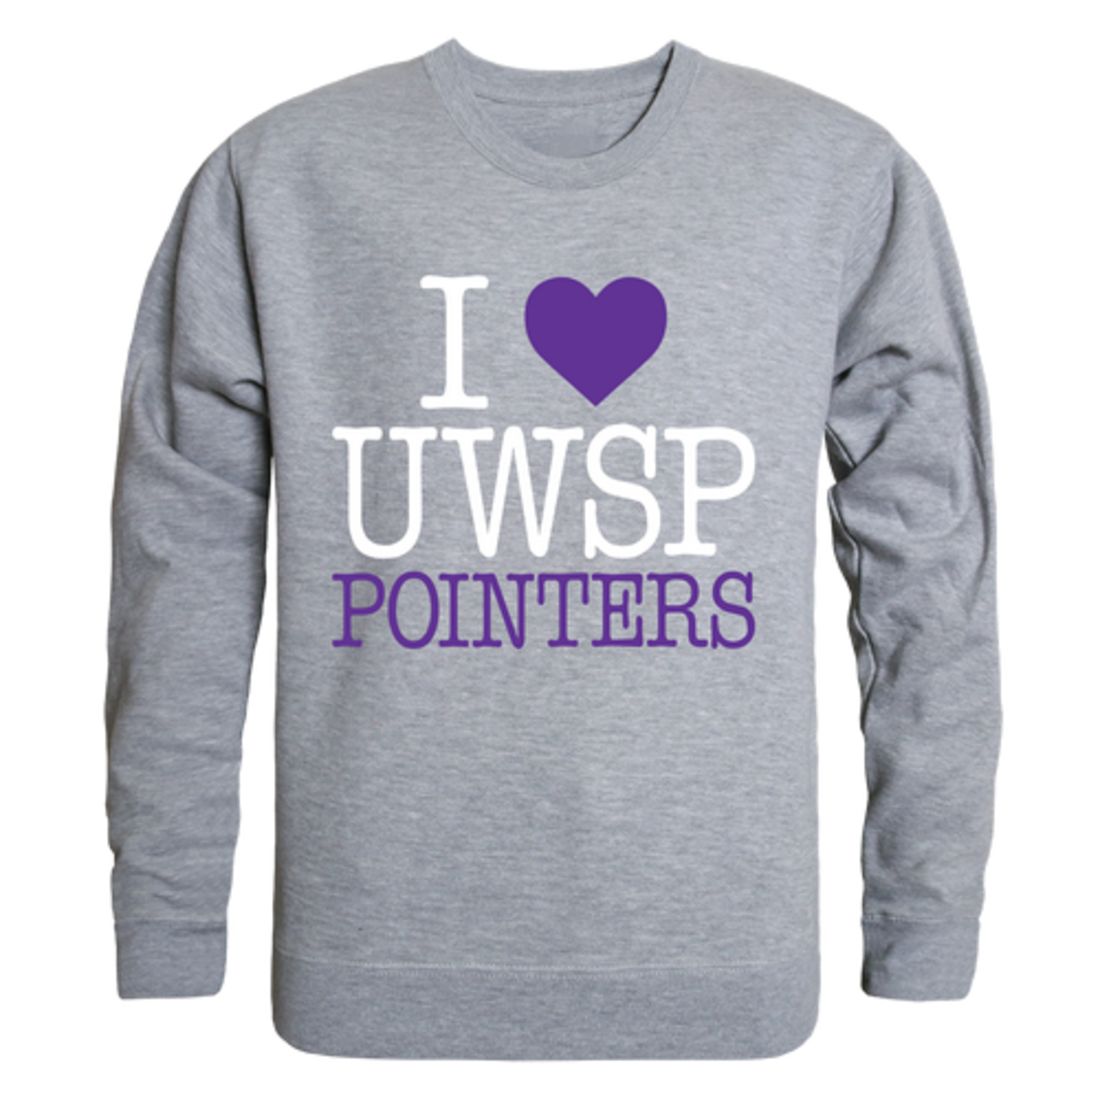 I Love UWSP University of Wisconsin Stevens Point Pointers Crewneck Pullover Sweatshirt Sweater Heather Grey Small - image 1 of 2